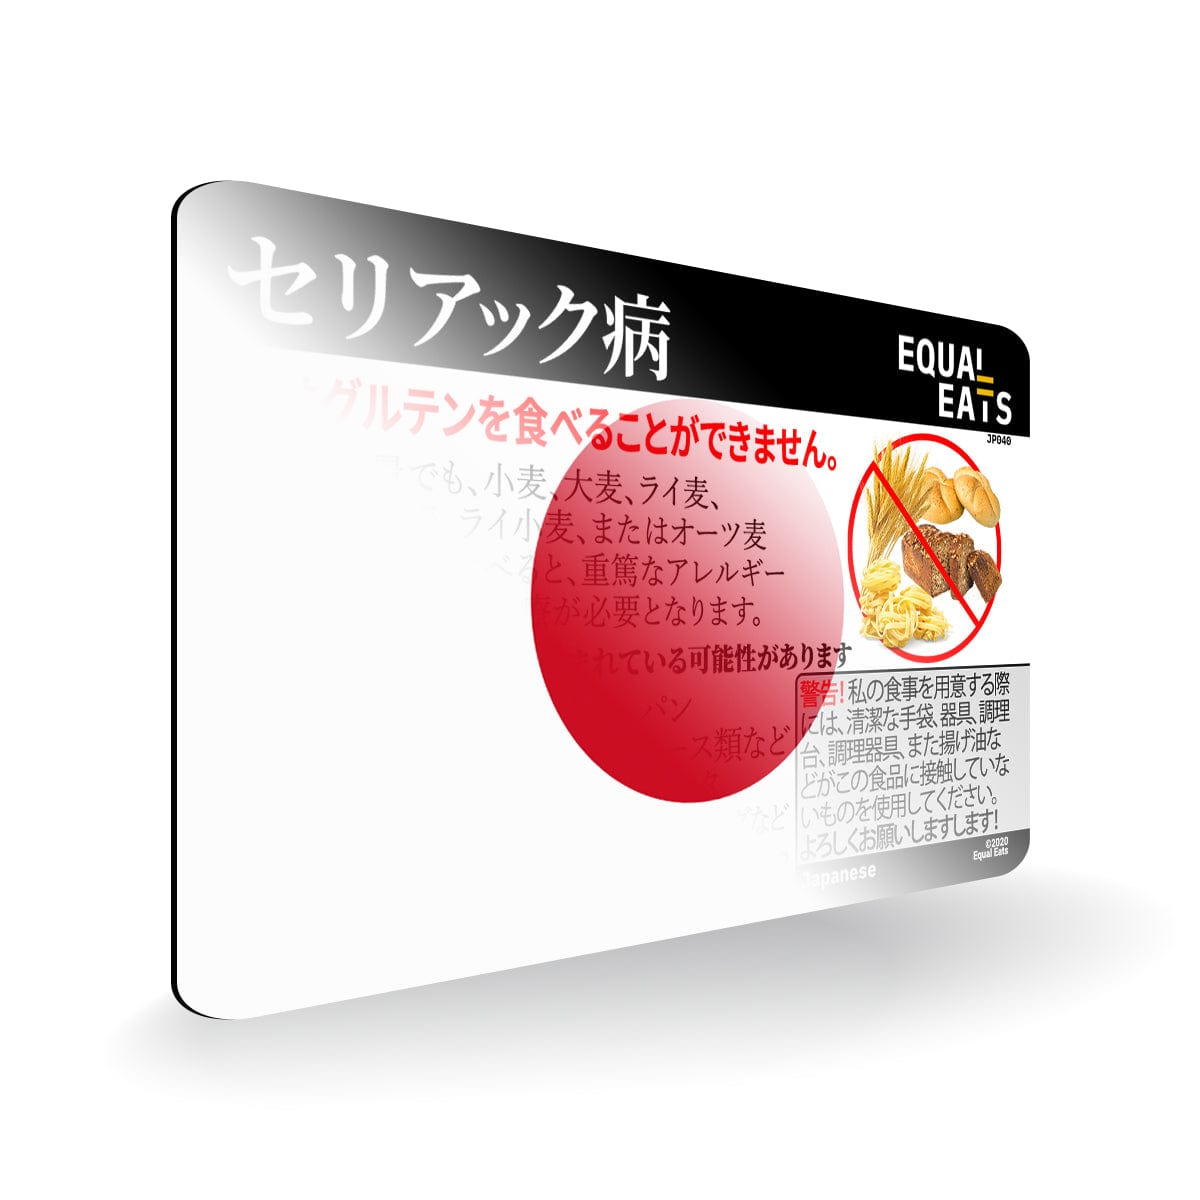 Japanese Celiac Disease Card - Gluten Free Travel in Japan